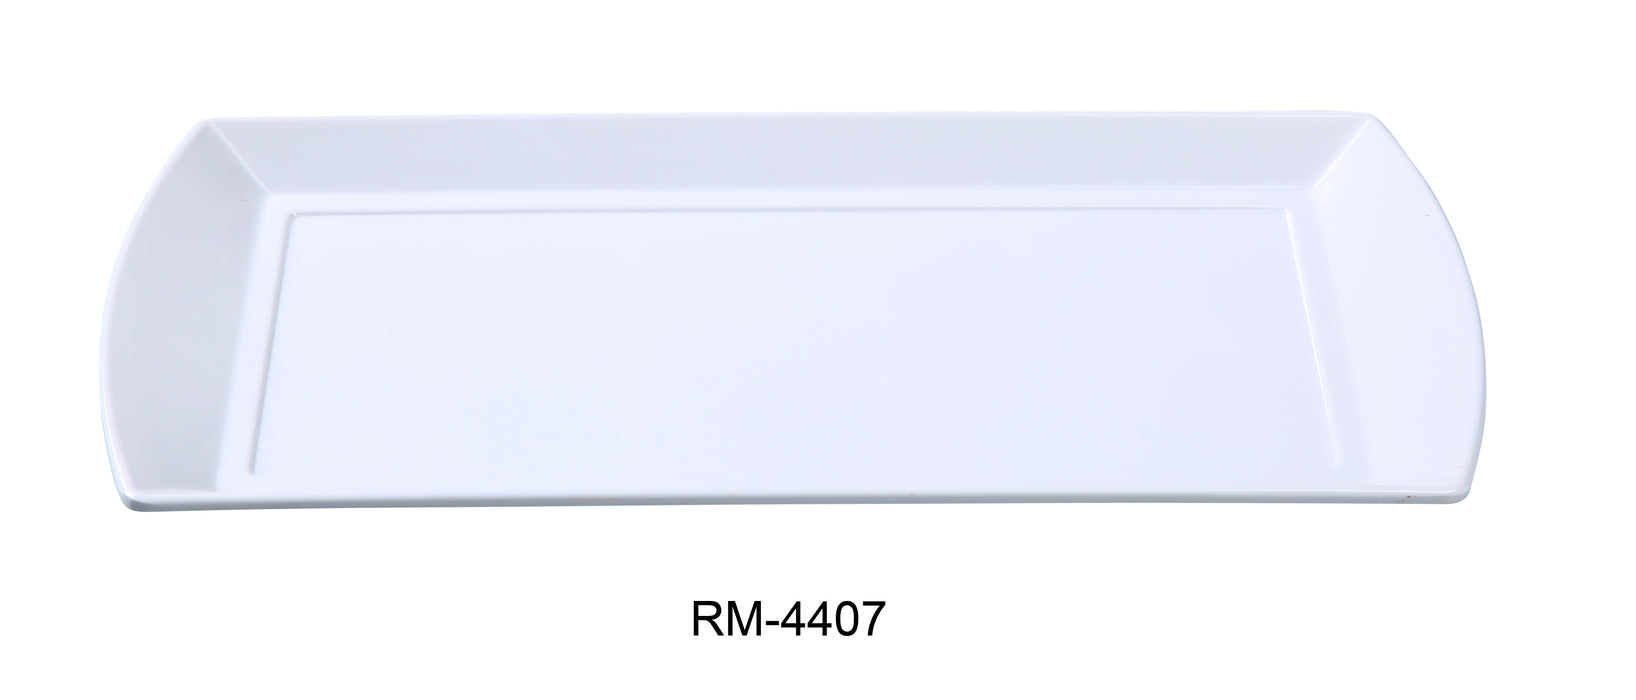 Yanco RM-4407 Rome Rectangular Plate, Melamine, Pack of 24 (2 Dz)